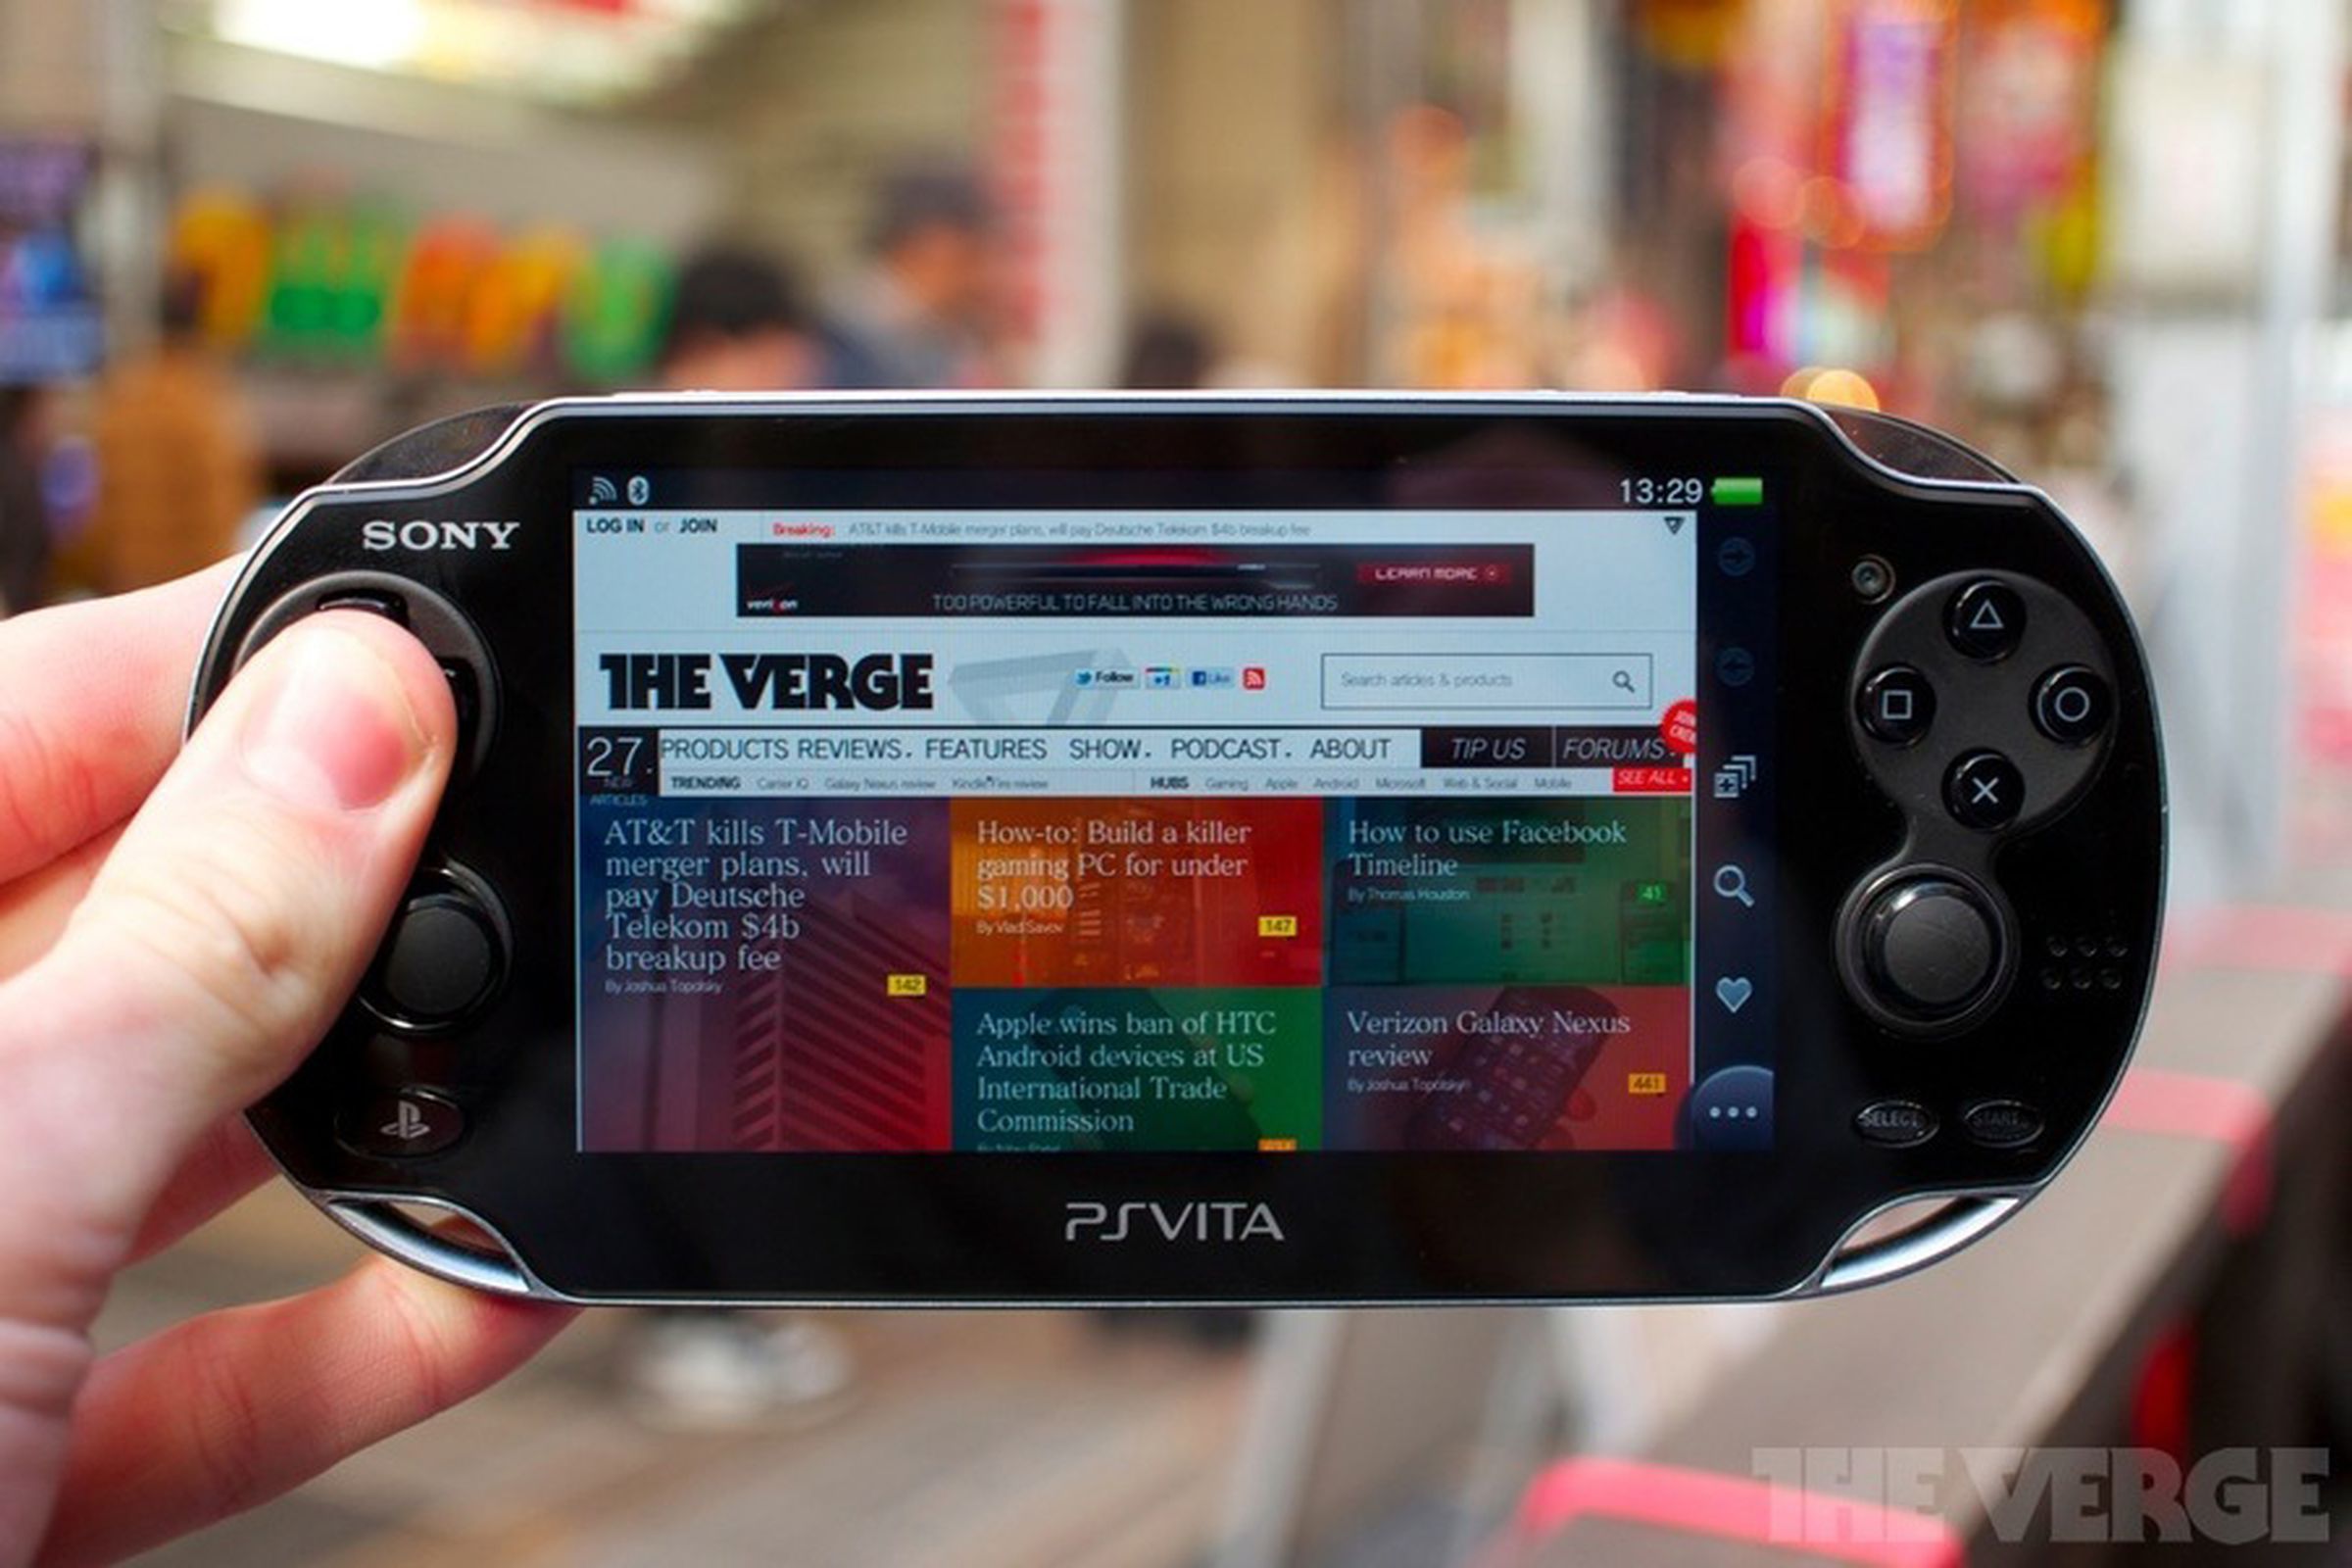 PS Vita verge browser stock 900